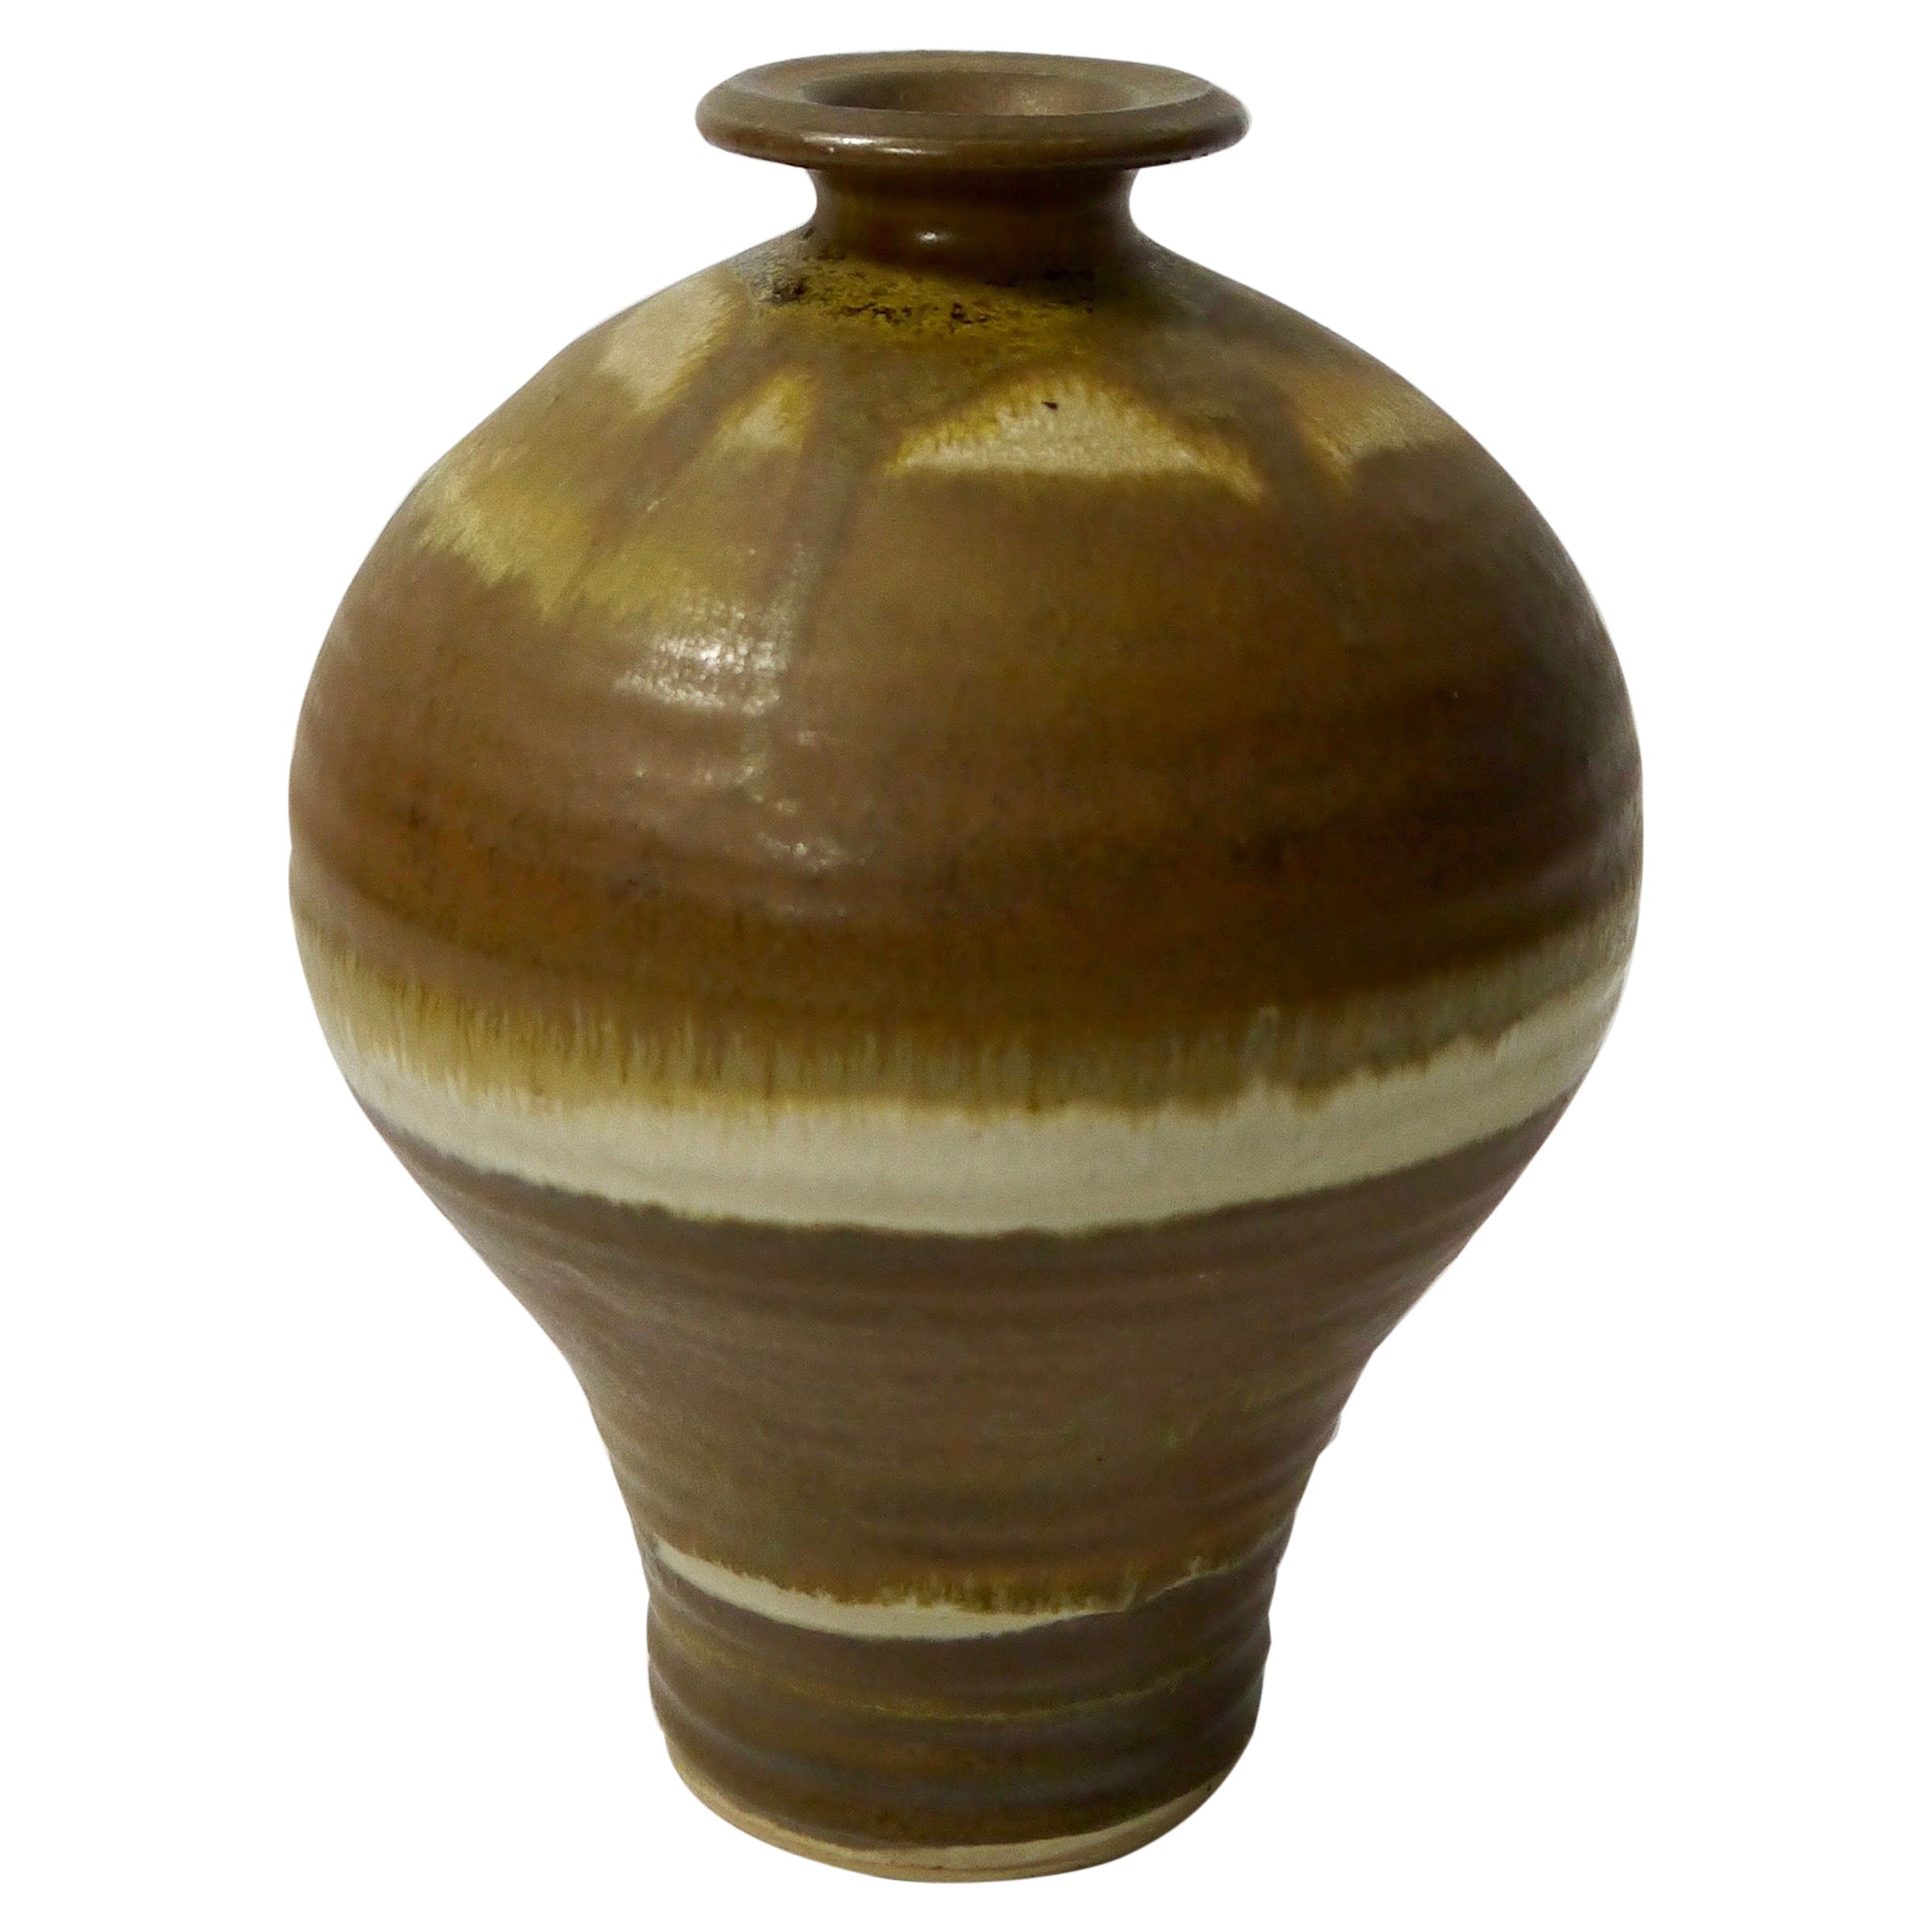 Handgedrehte Vase aus glasierter, erdfarbener Keramik